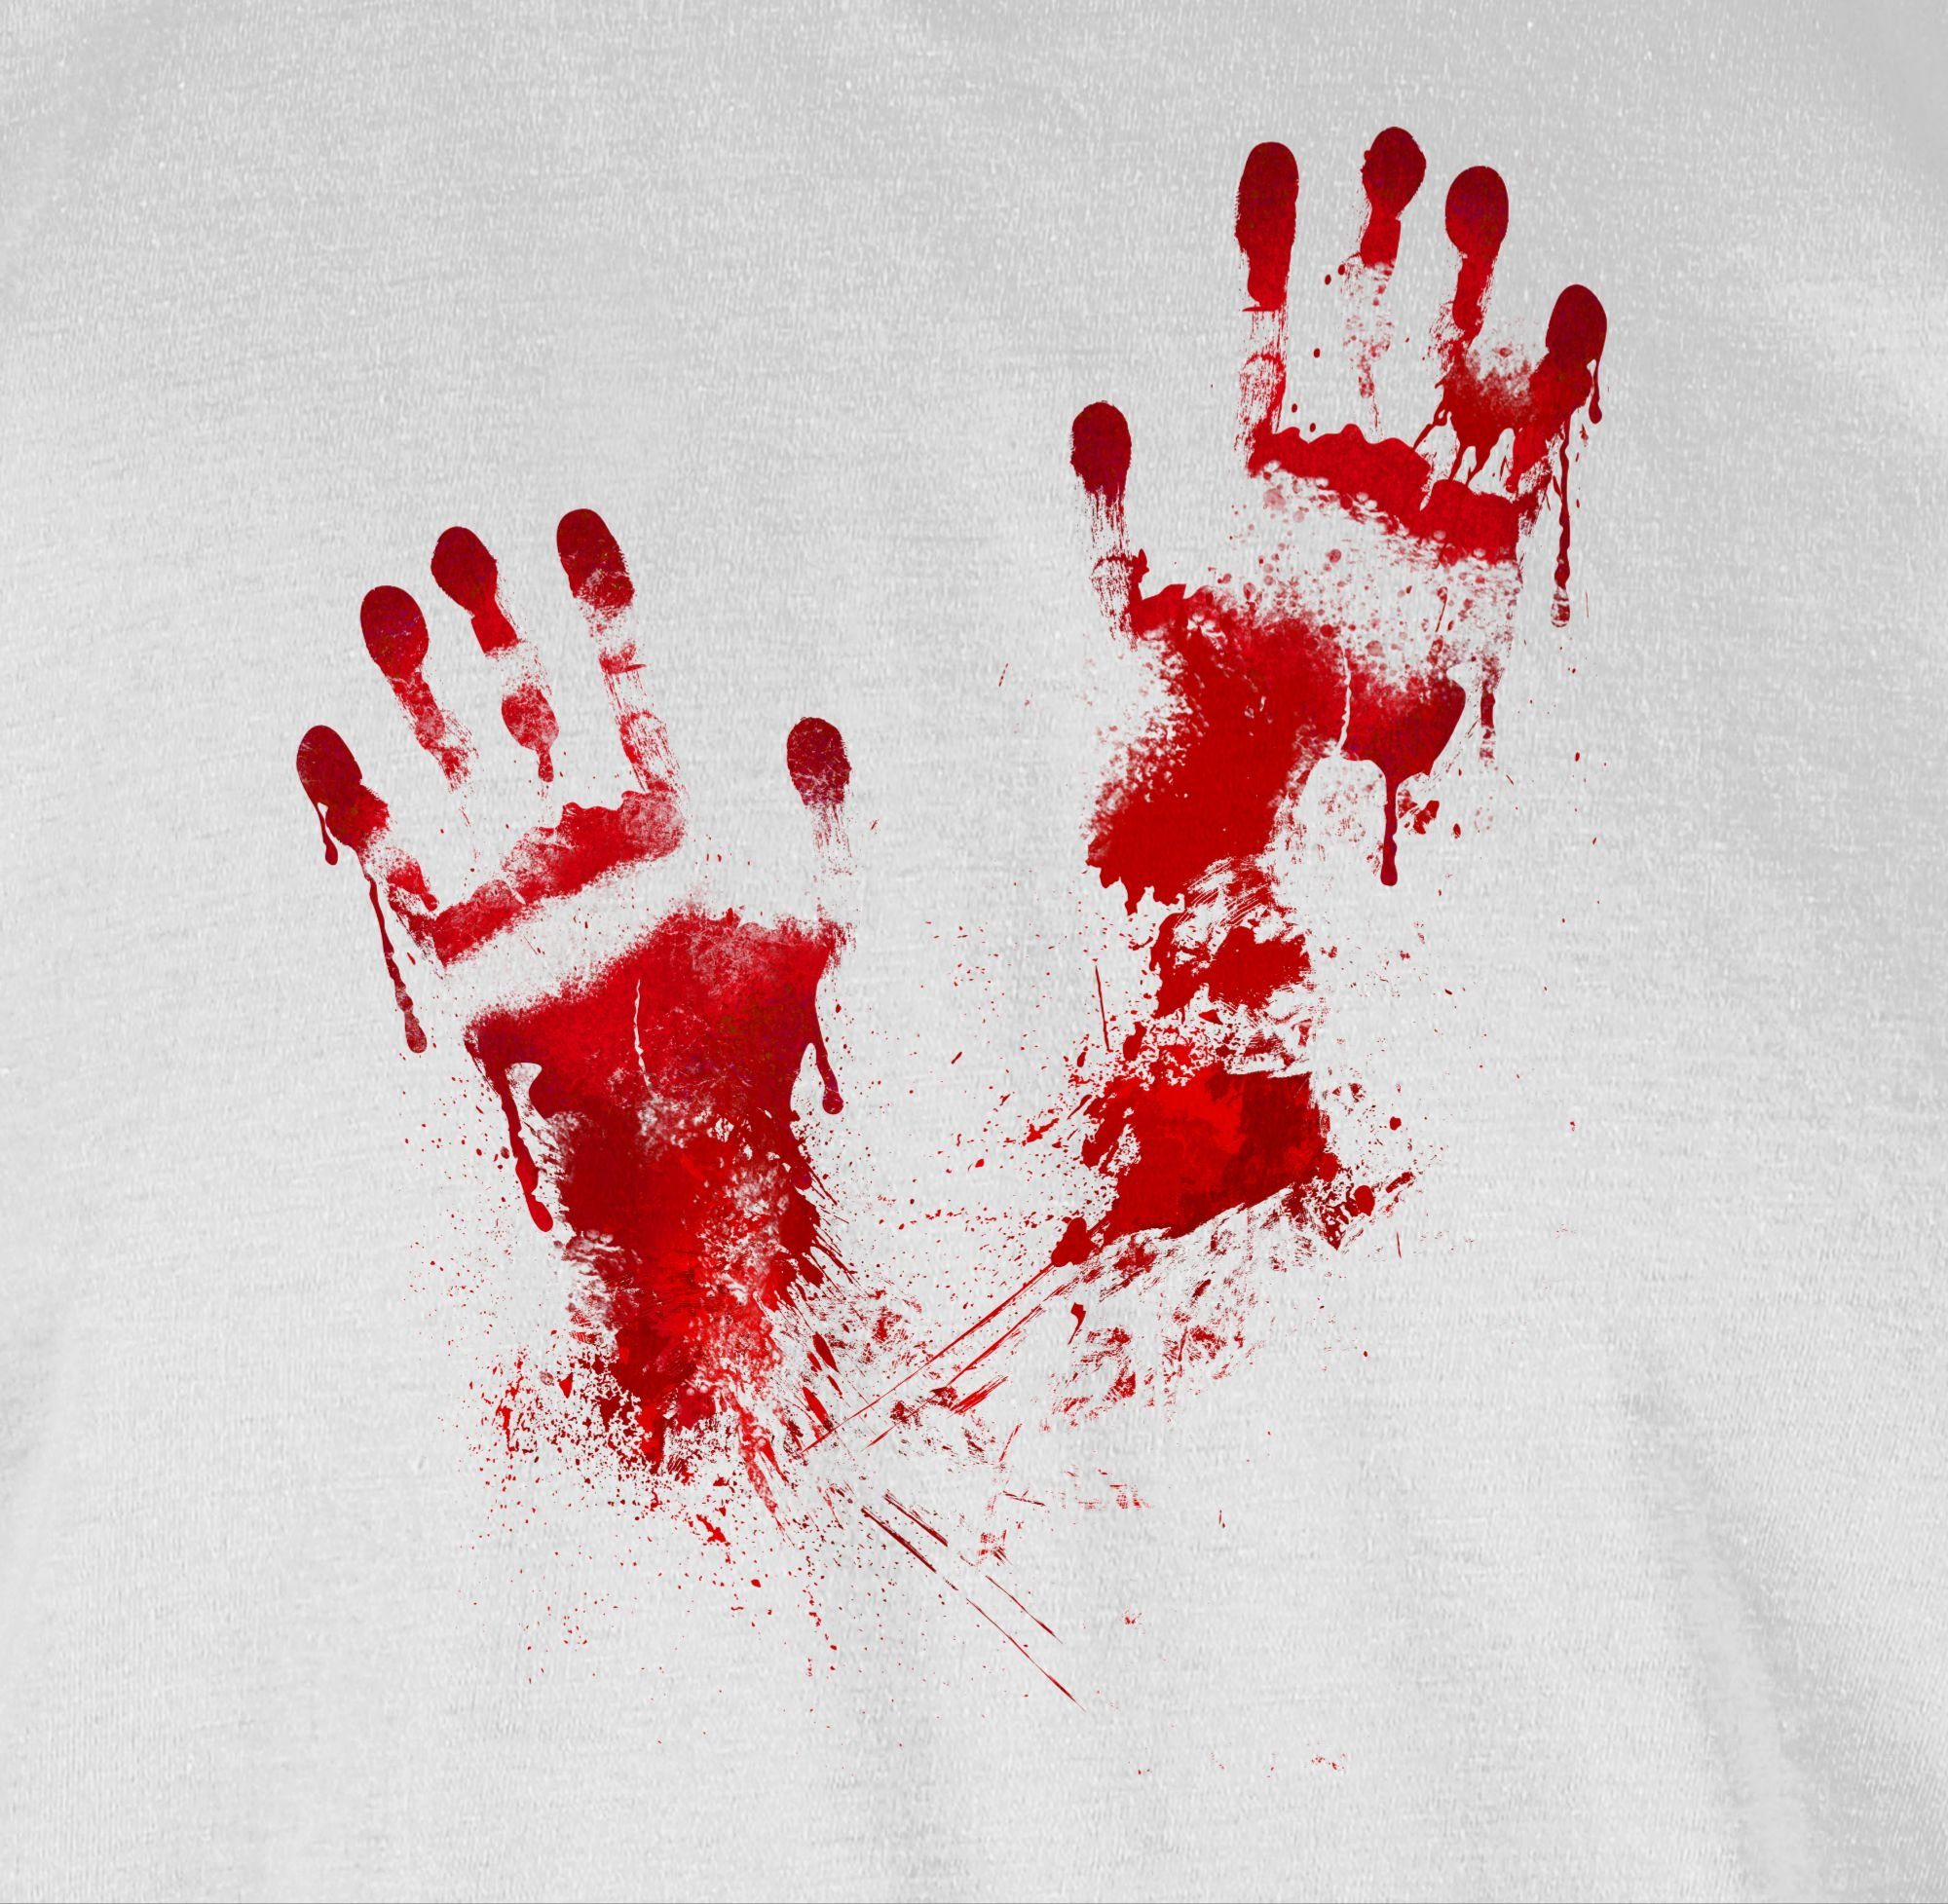 Blutige Herren 02 Kostüme Shirtracer Blut T-Shirt Weiß Handabdruck Halloween Handabdrücke Gruselig